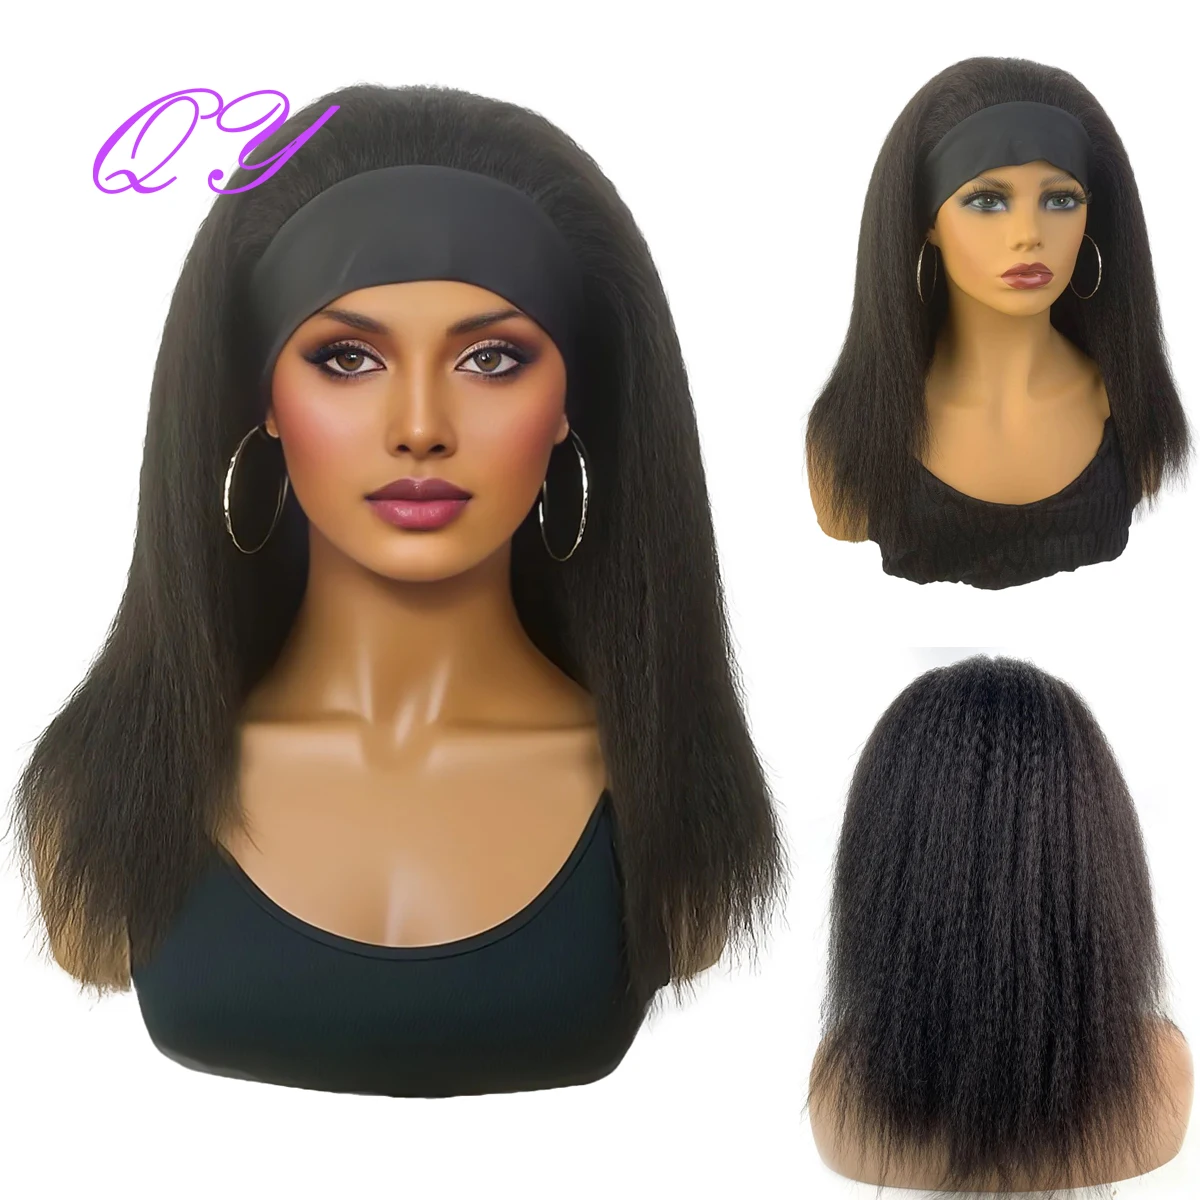 Rican women yaki straight headband wigs black medium length hairstyle women s wig daily thumb200